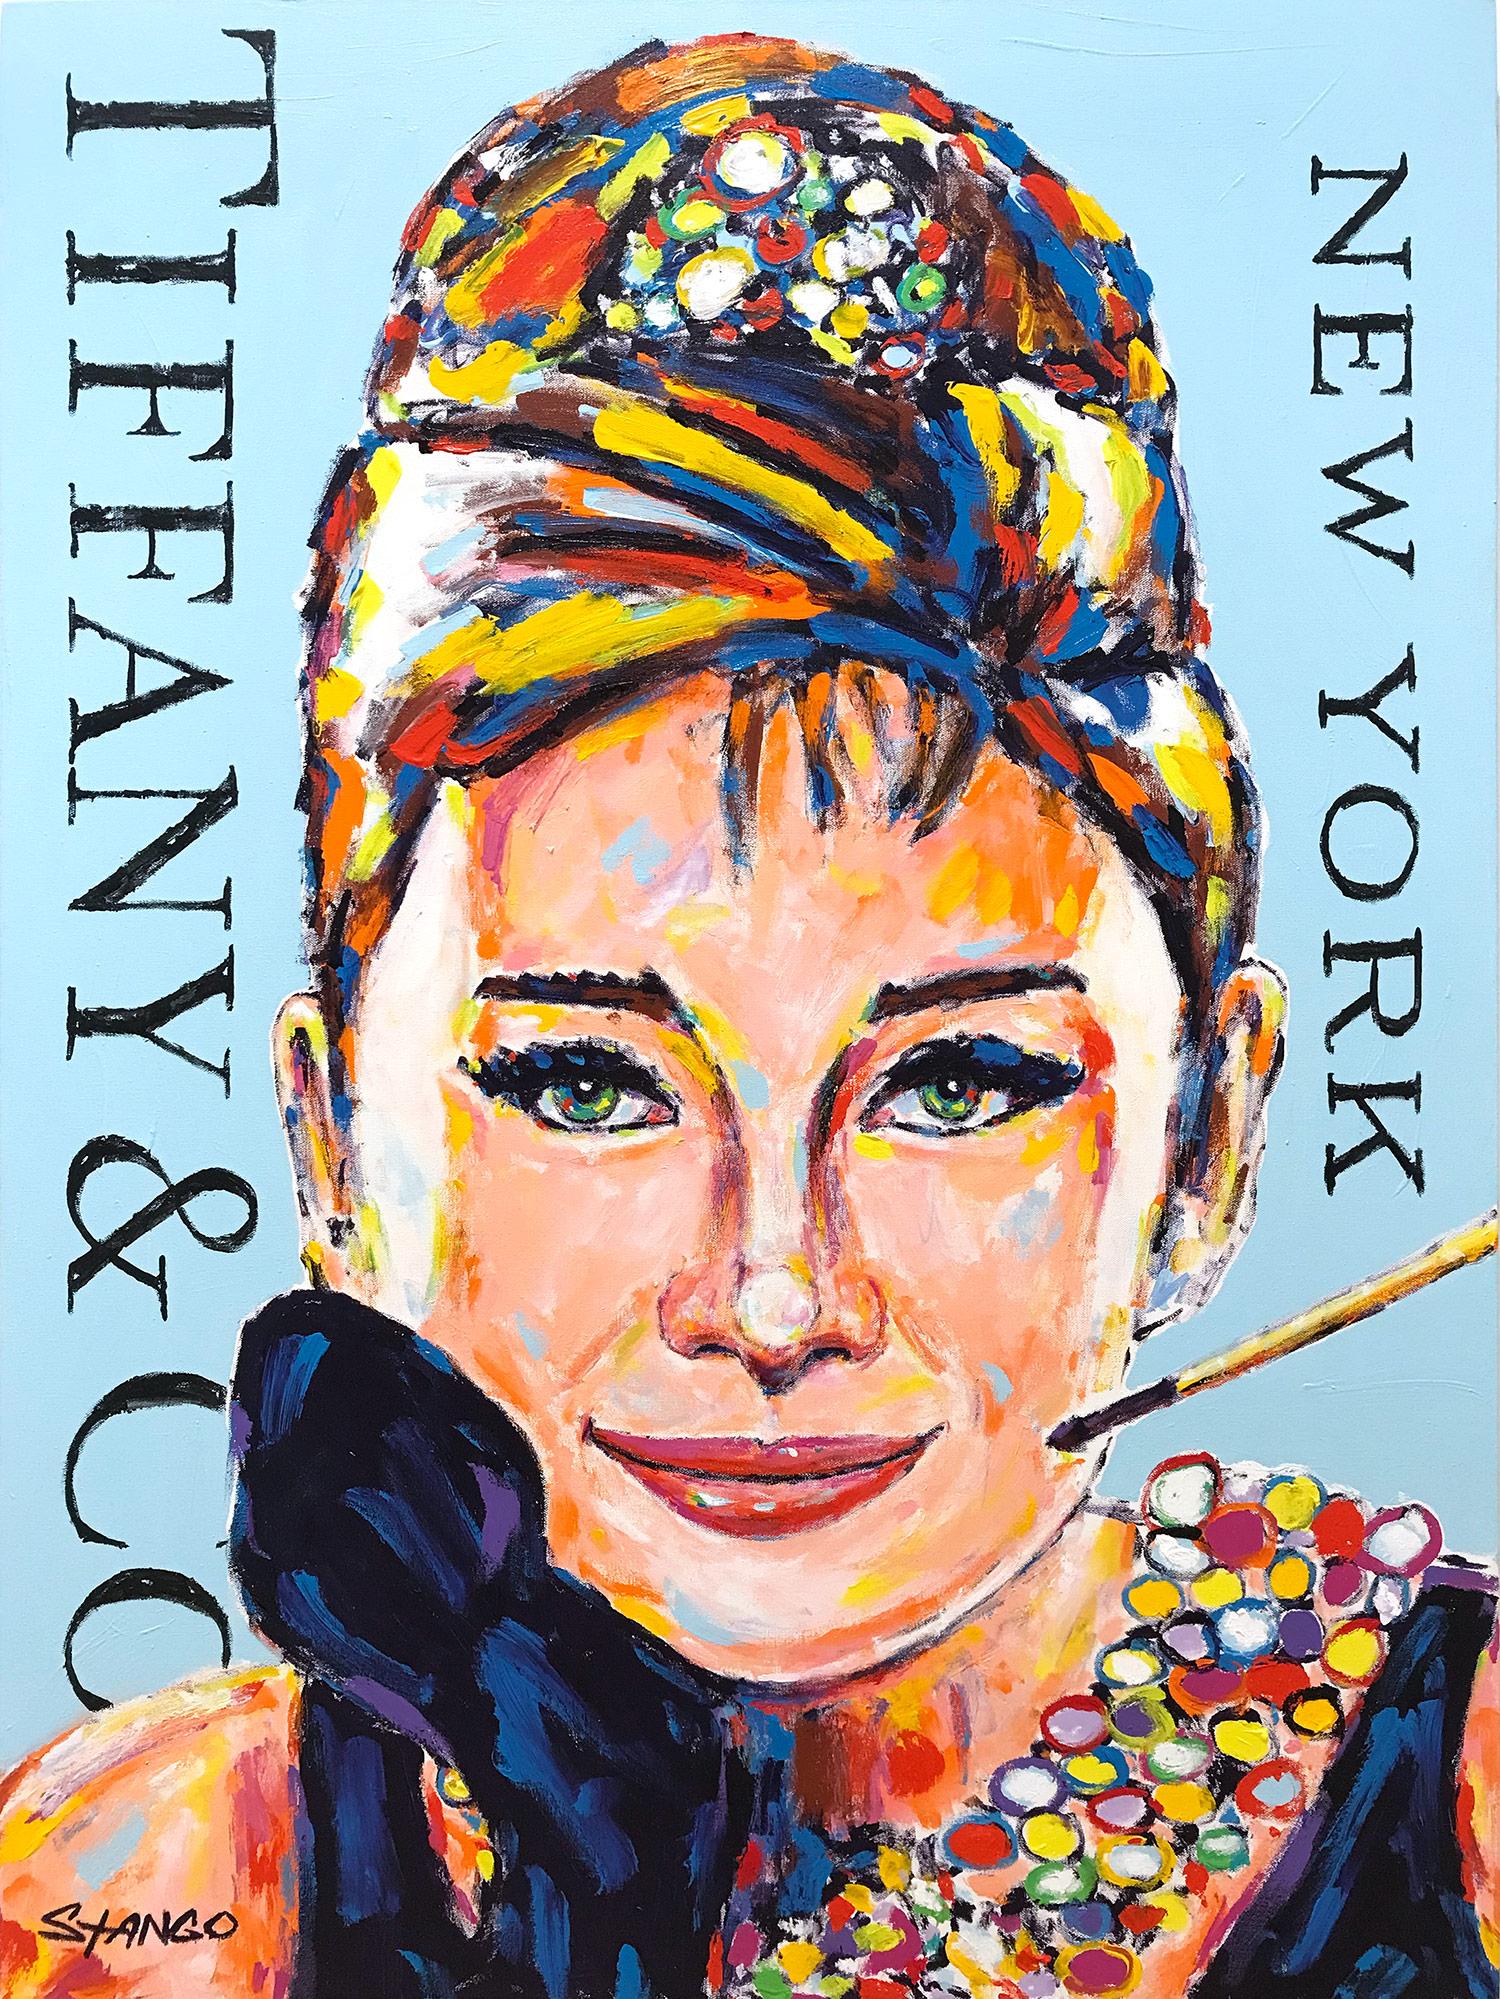 "Miss Audrey Hepburn" Audrey & Tiffany & Co. Pop Art Acrylic Painting on Canvas